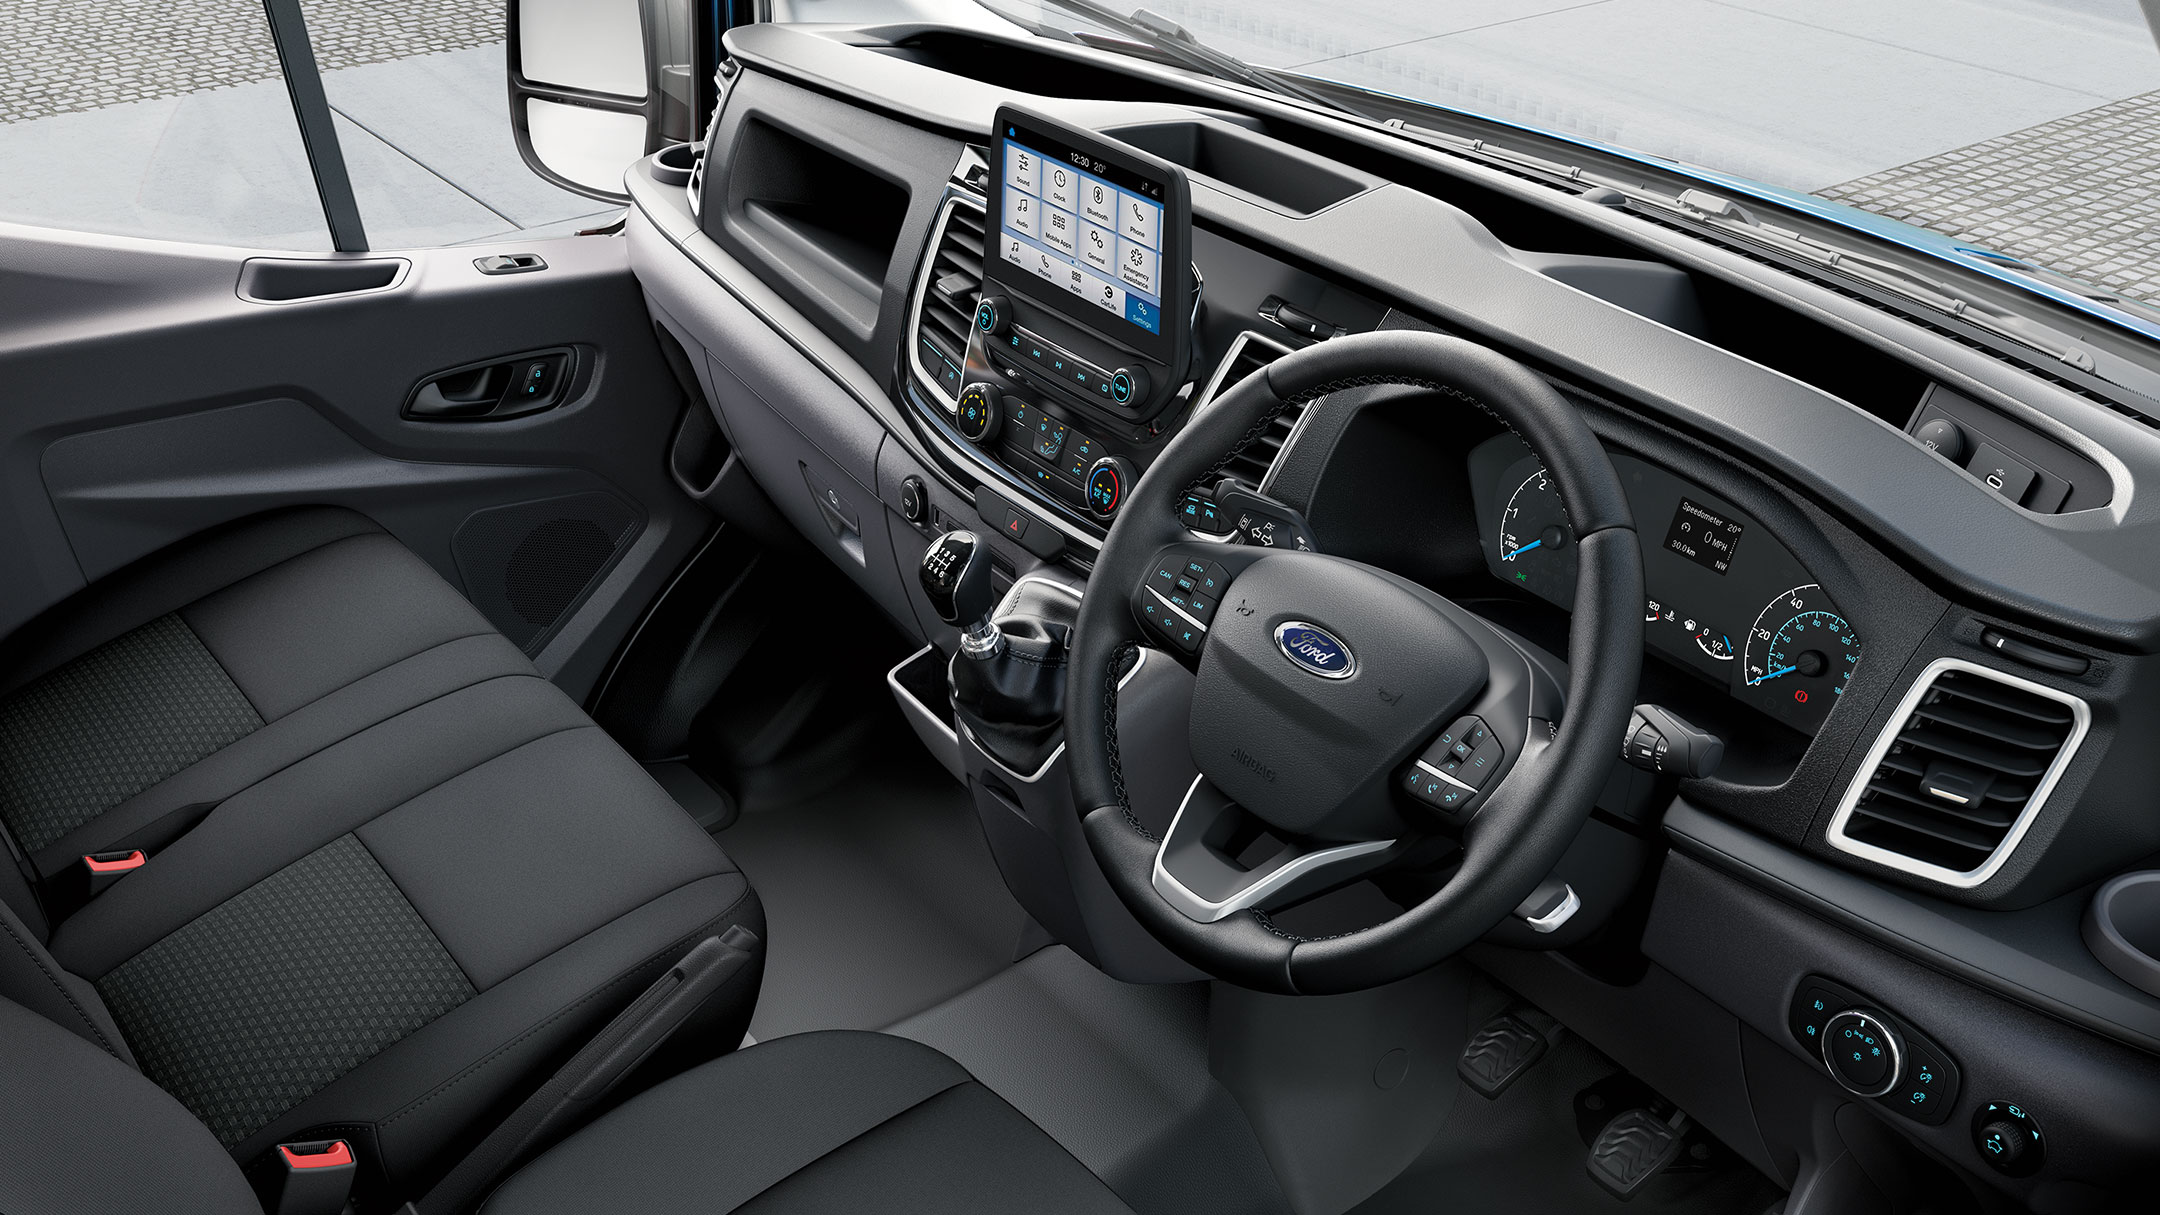 Ford Transit Minibus interior cabin view